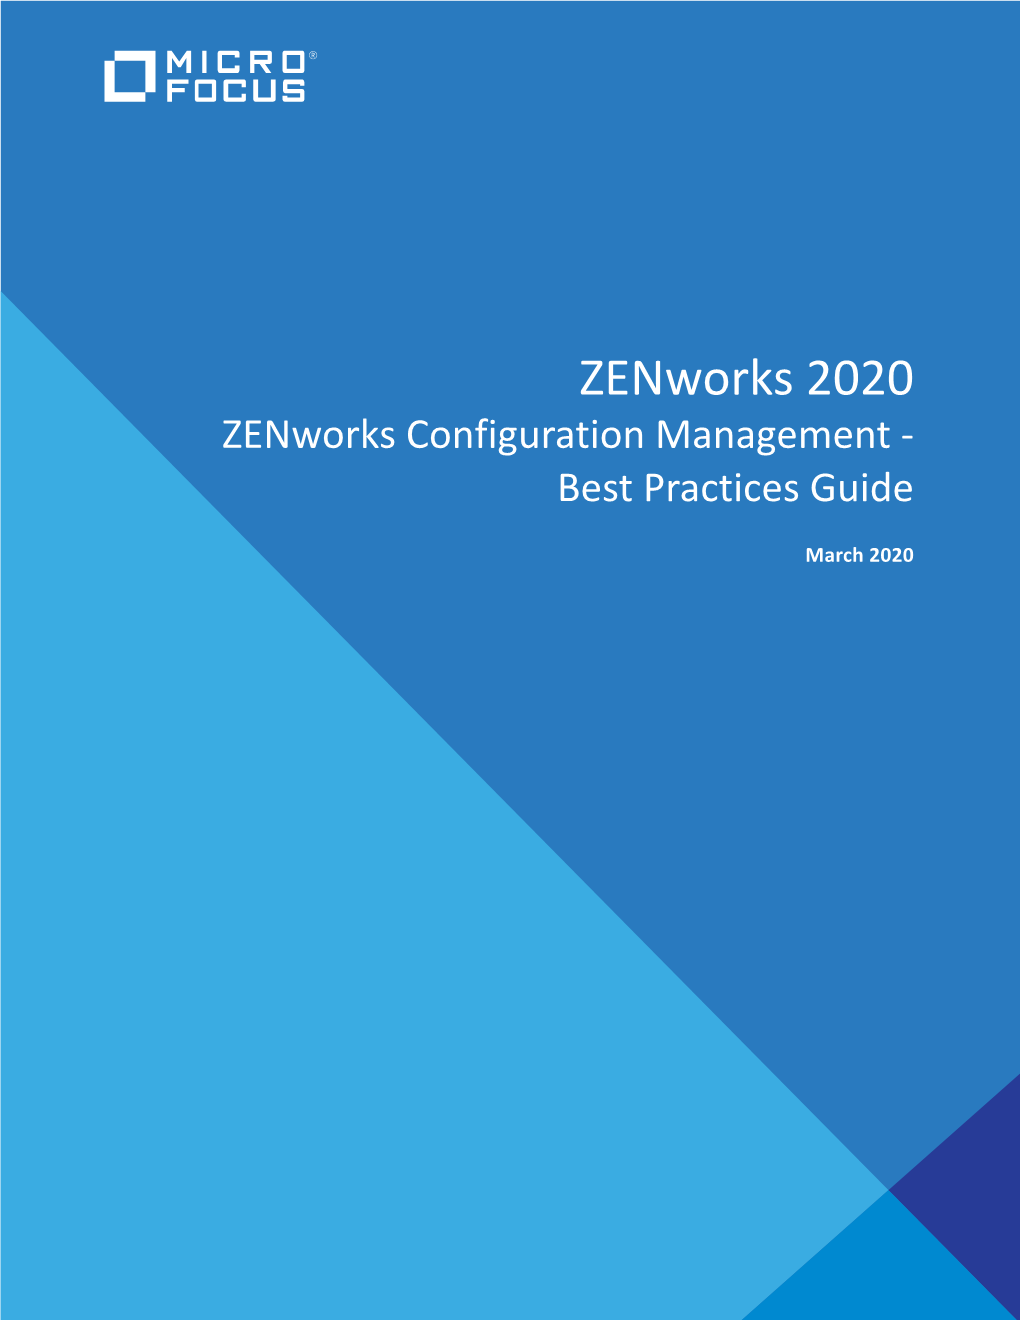 Zenworks Configuration Management - Best Practices Guide